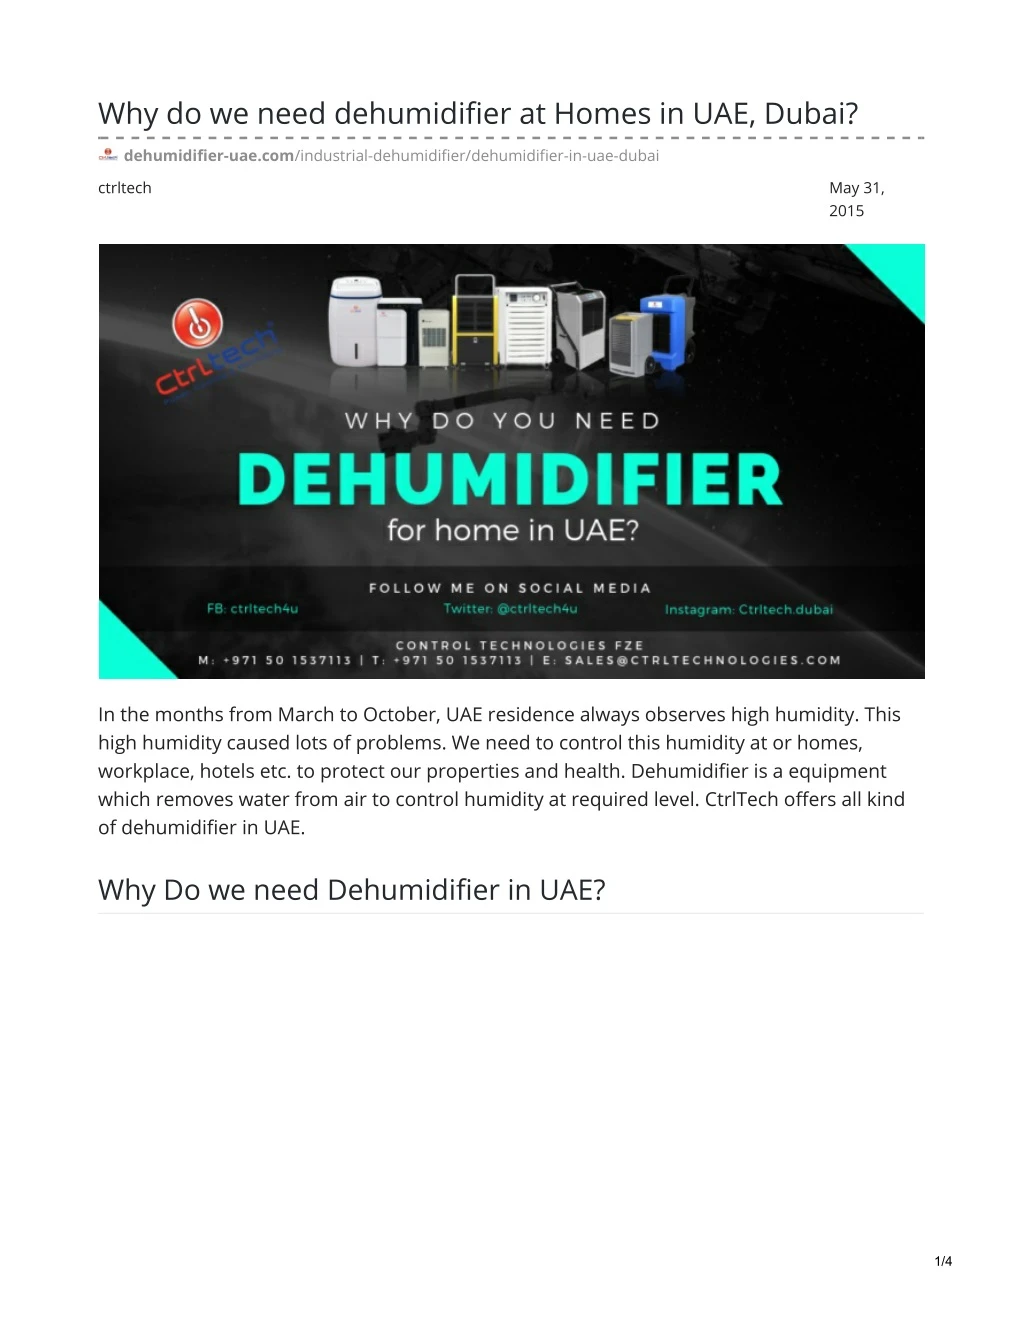 why do we need dehumidifier at homes in uae dubai